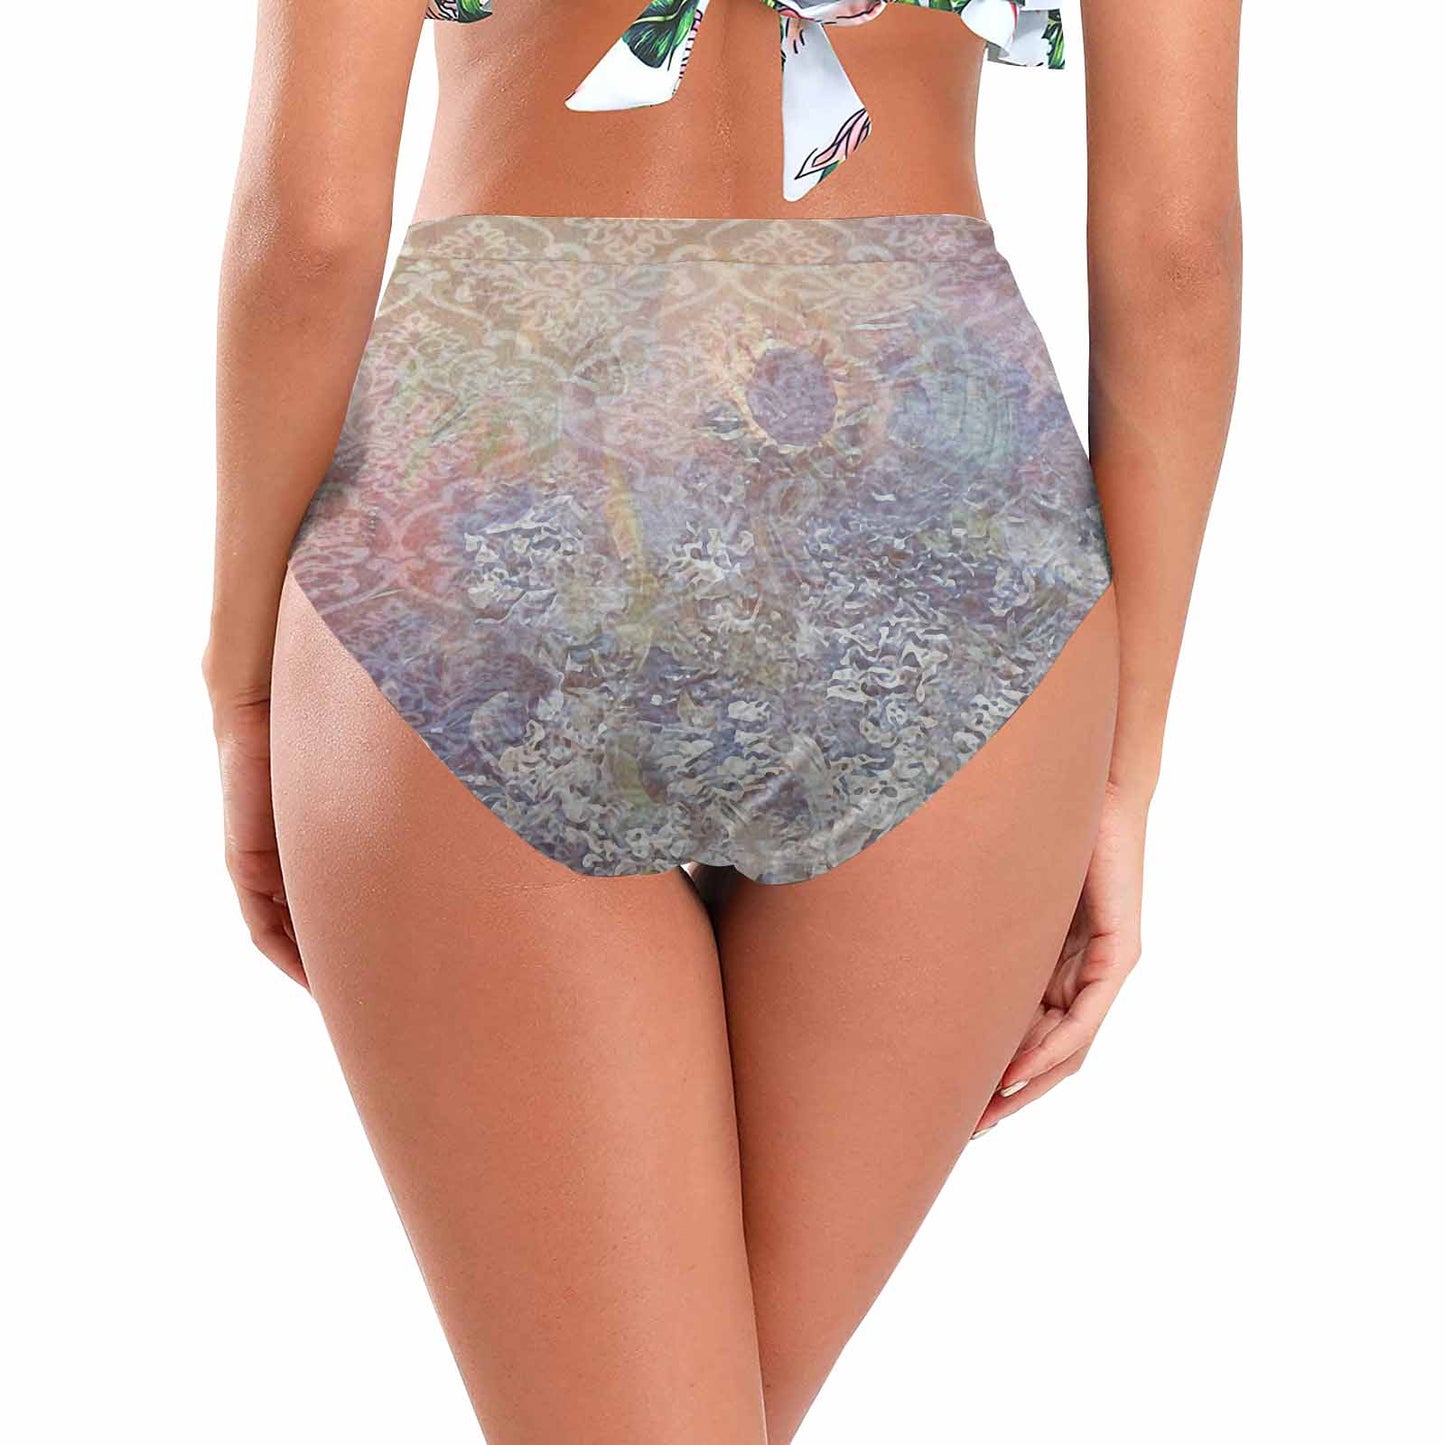 Vintage floral High waist bikini bottom, Design 54x